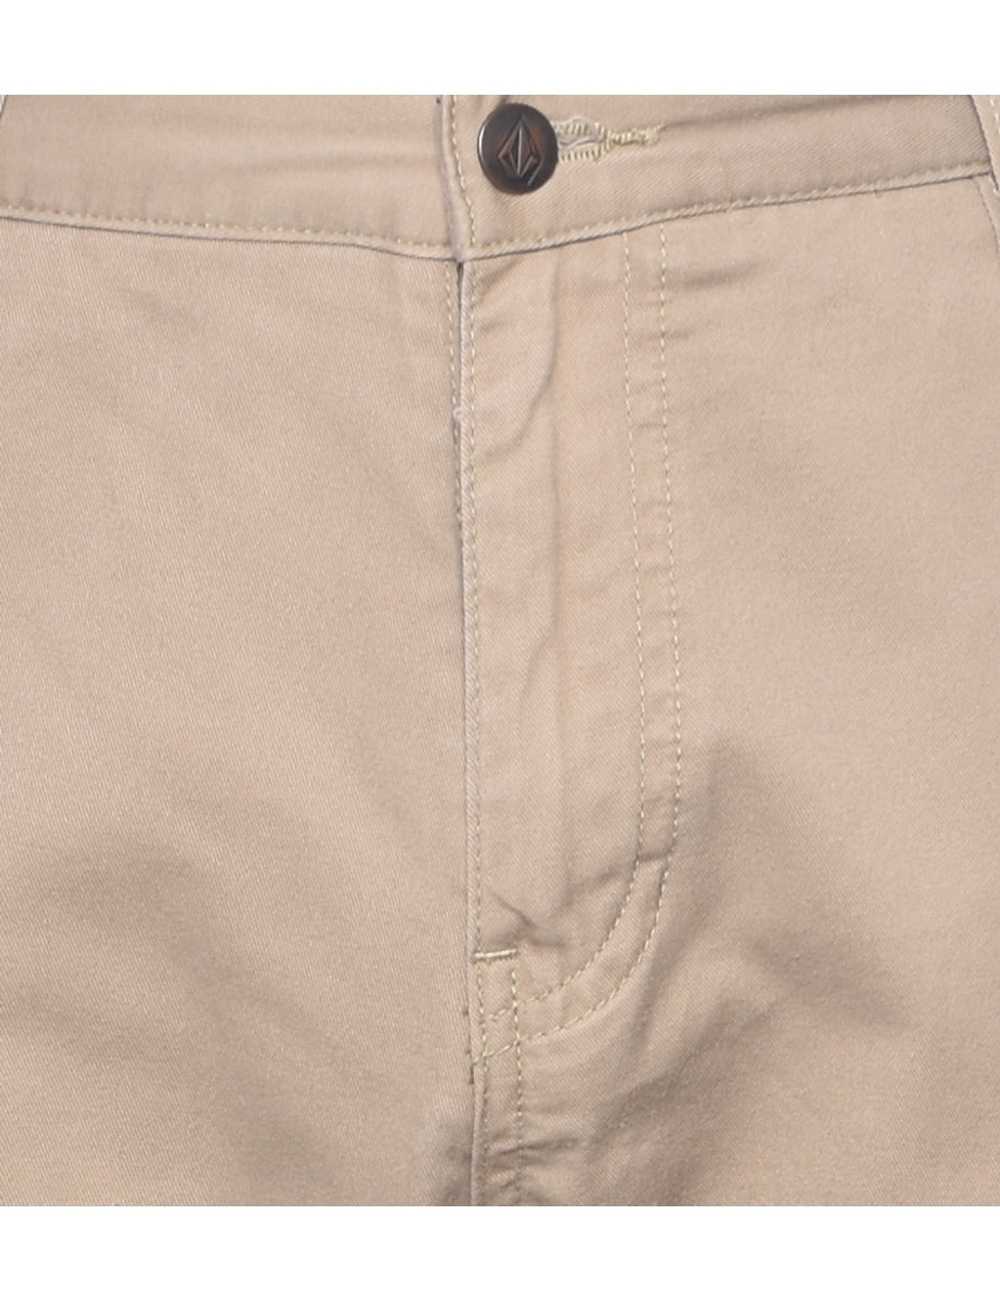 Beige Shorts - W30 L10 - image 3